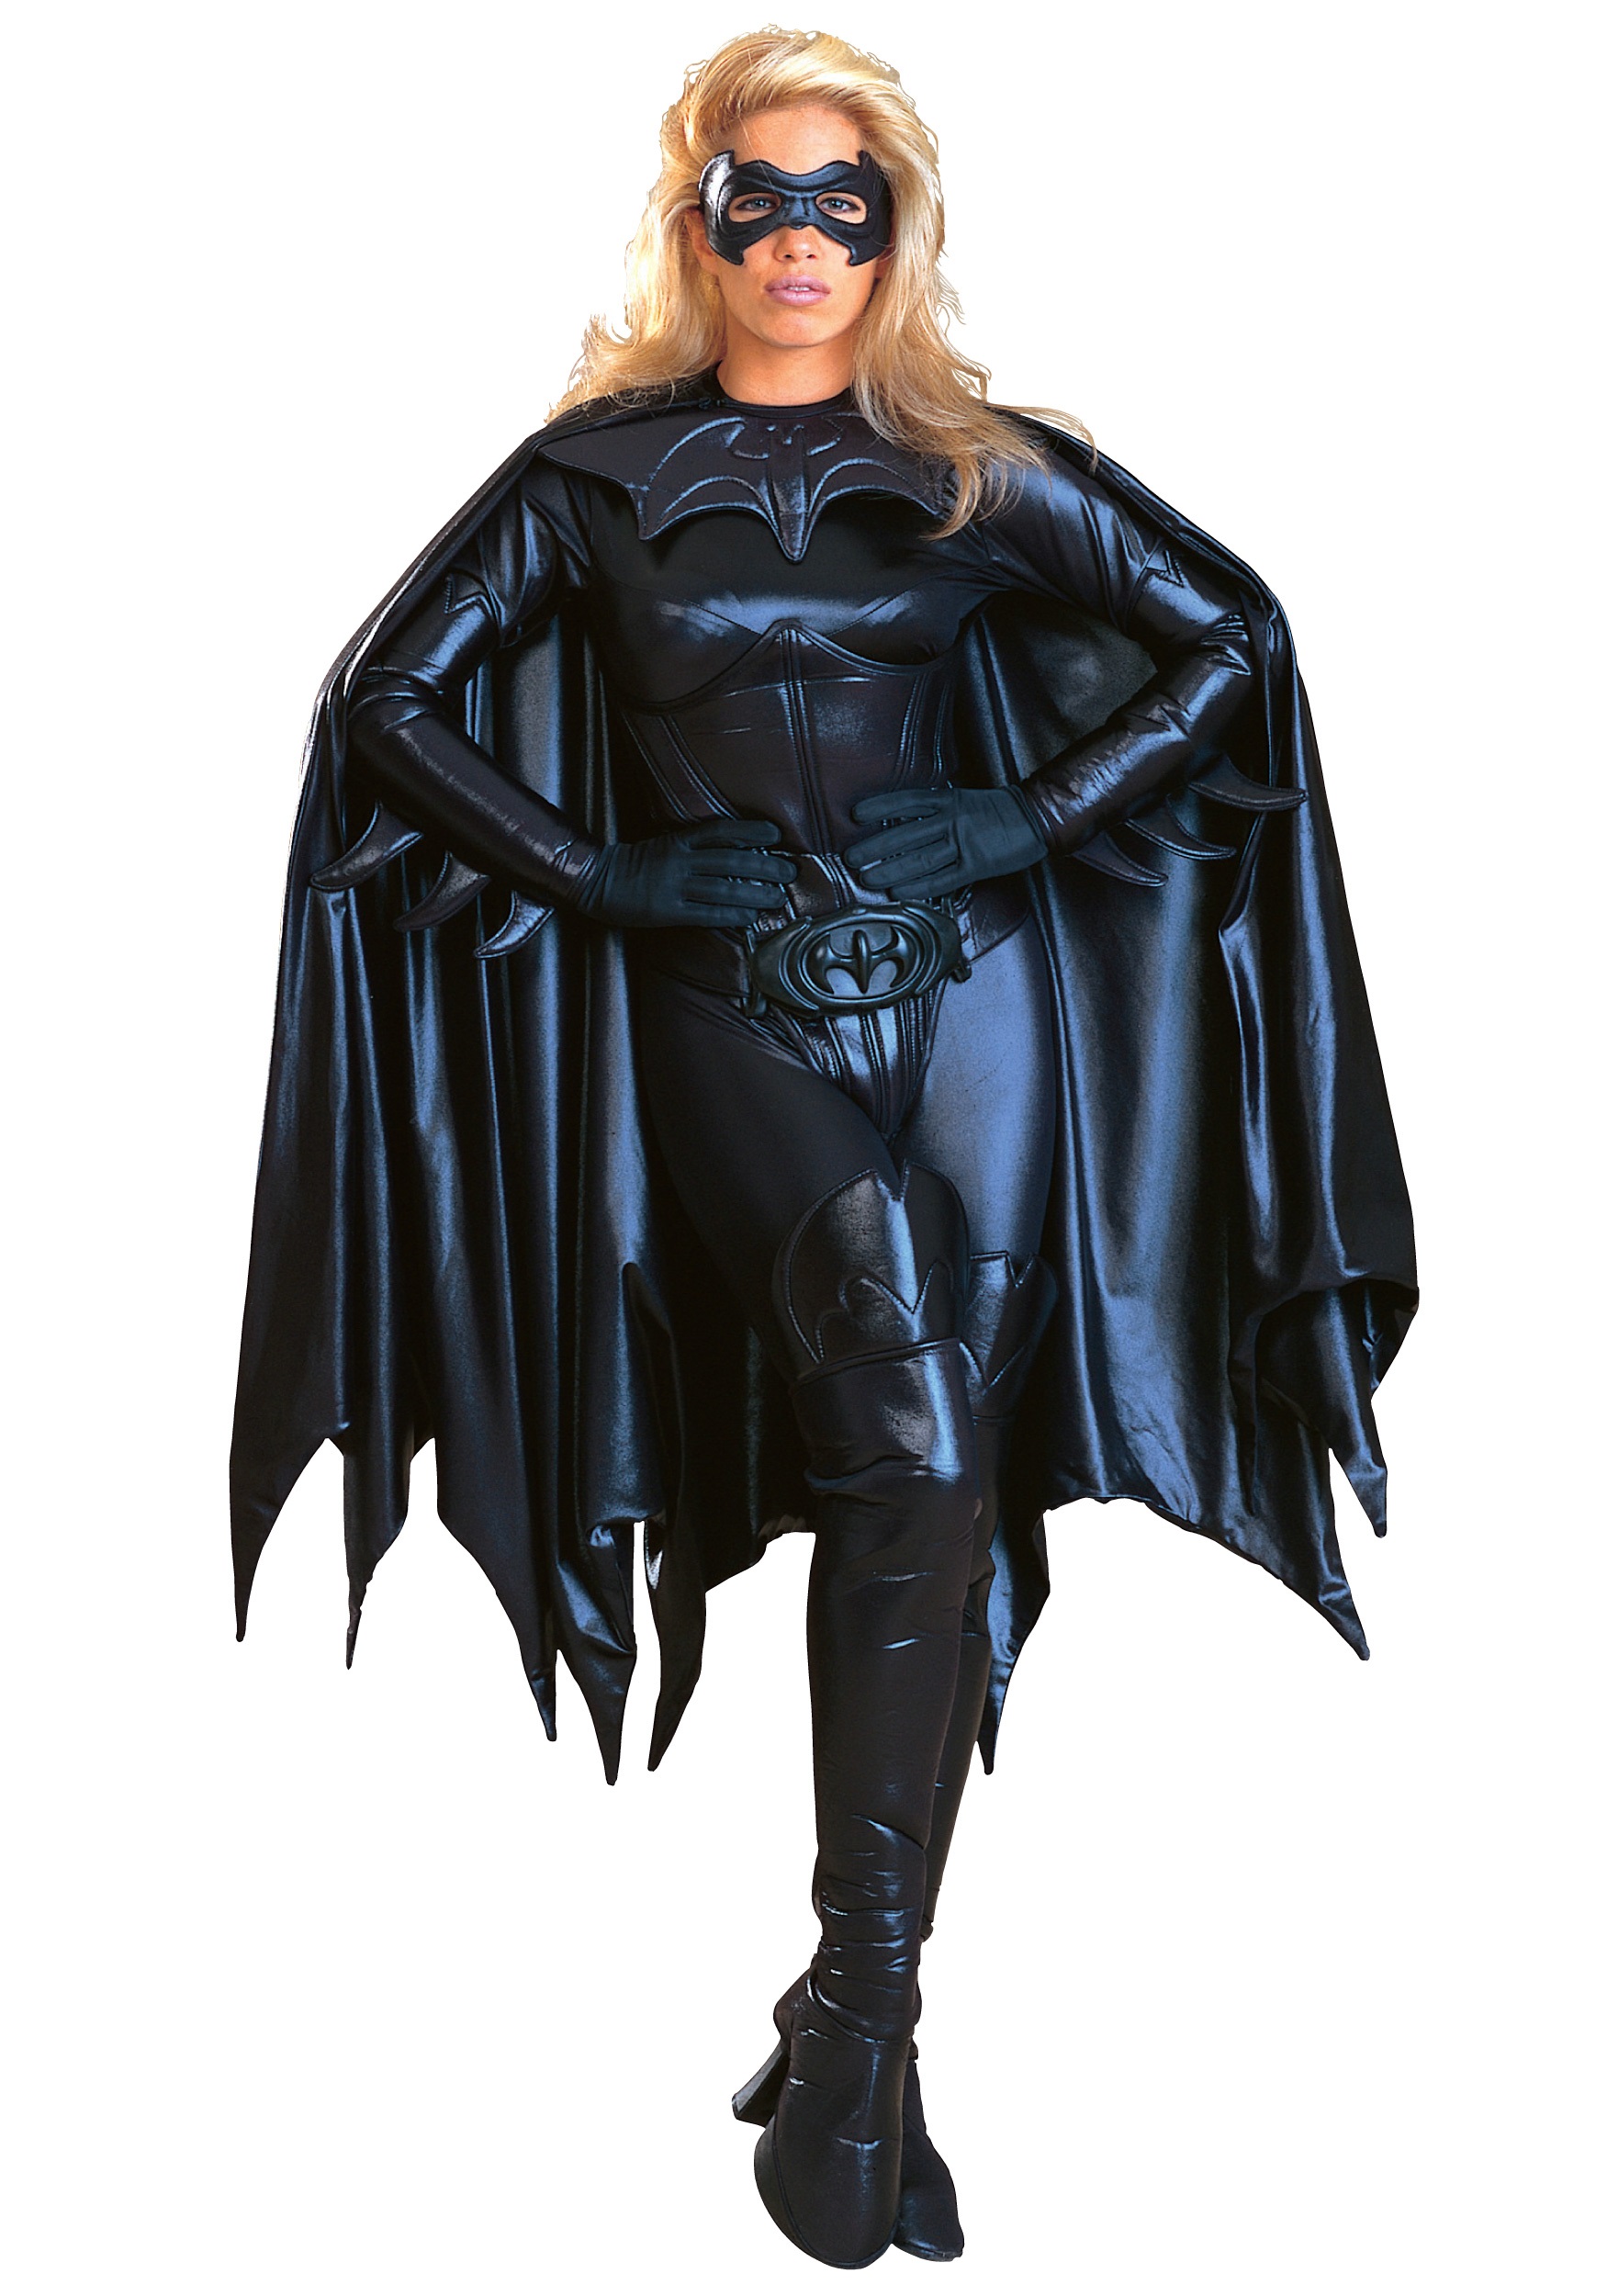 Authentic Batgirl Costume - Batgirl and Batman Couples Costumes